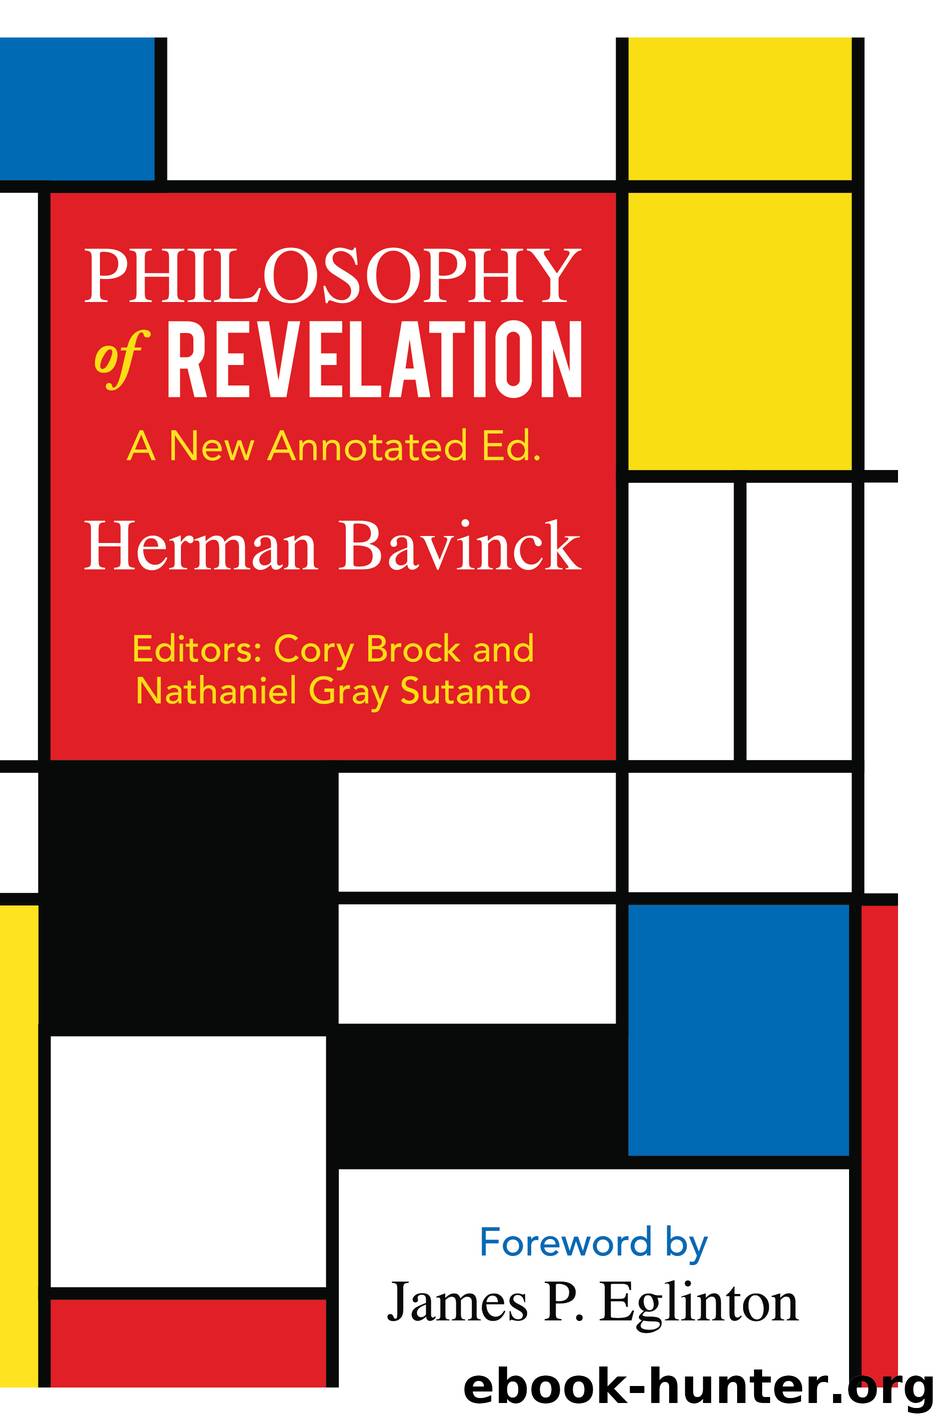 Philosophy of Revelation by Herman Bavinck